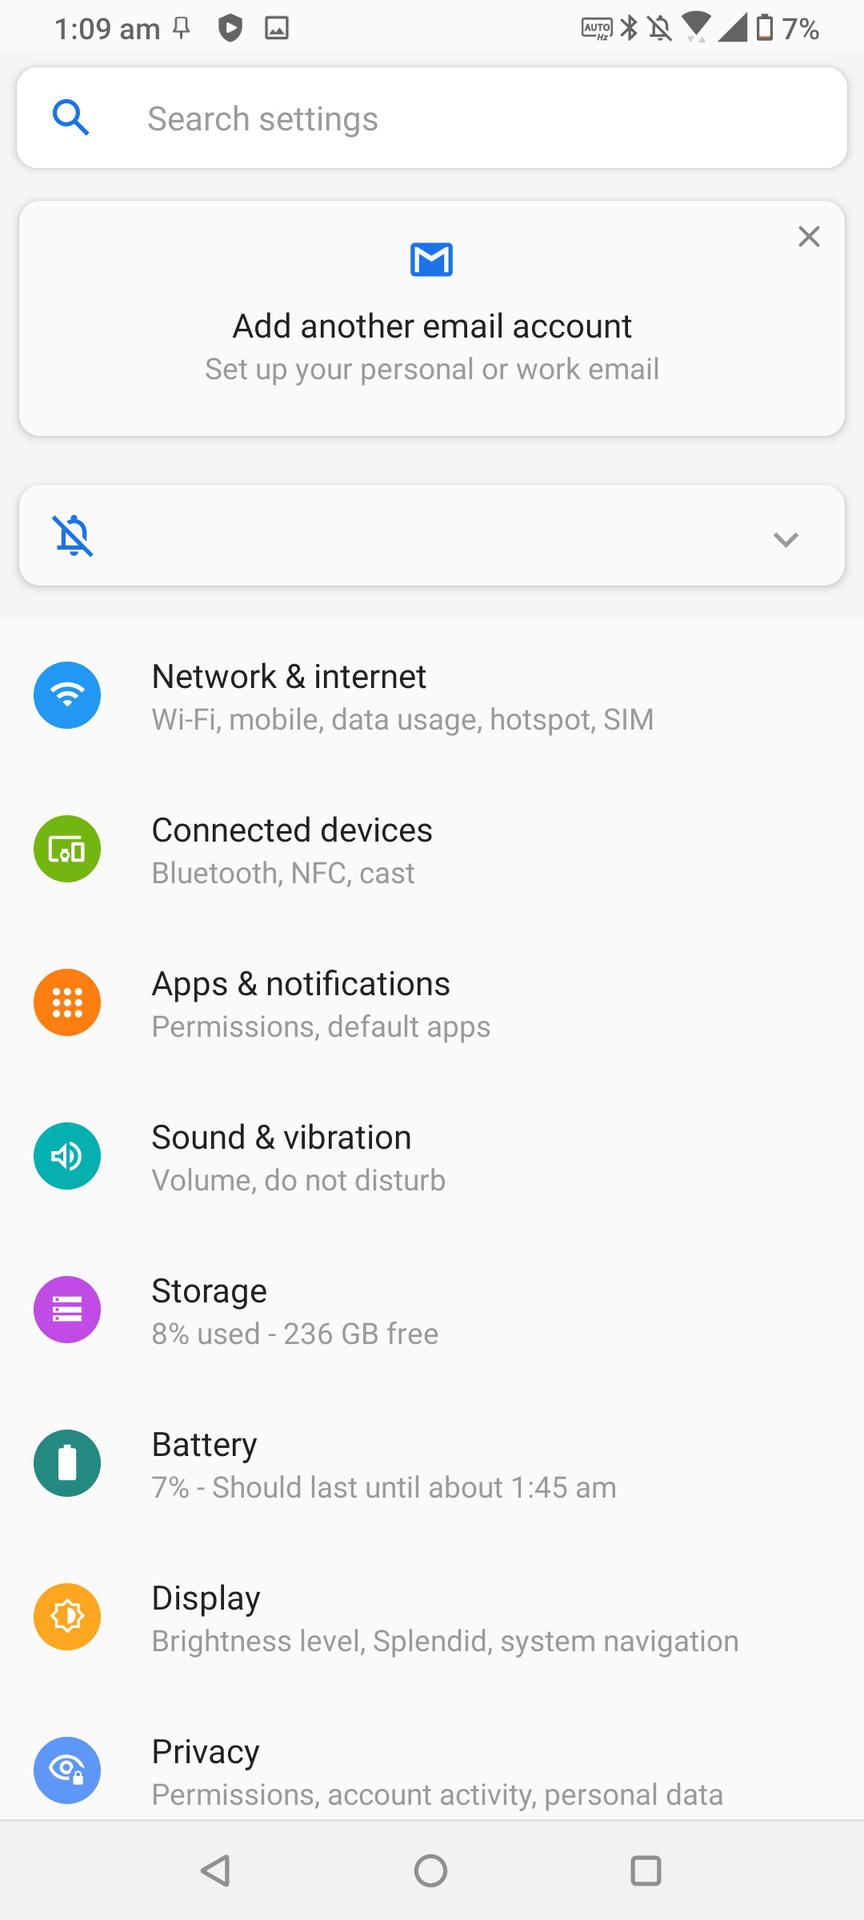 ASUS Zenfone 7 Pro settings menu 1